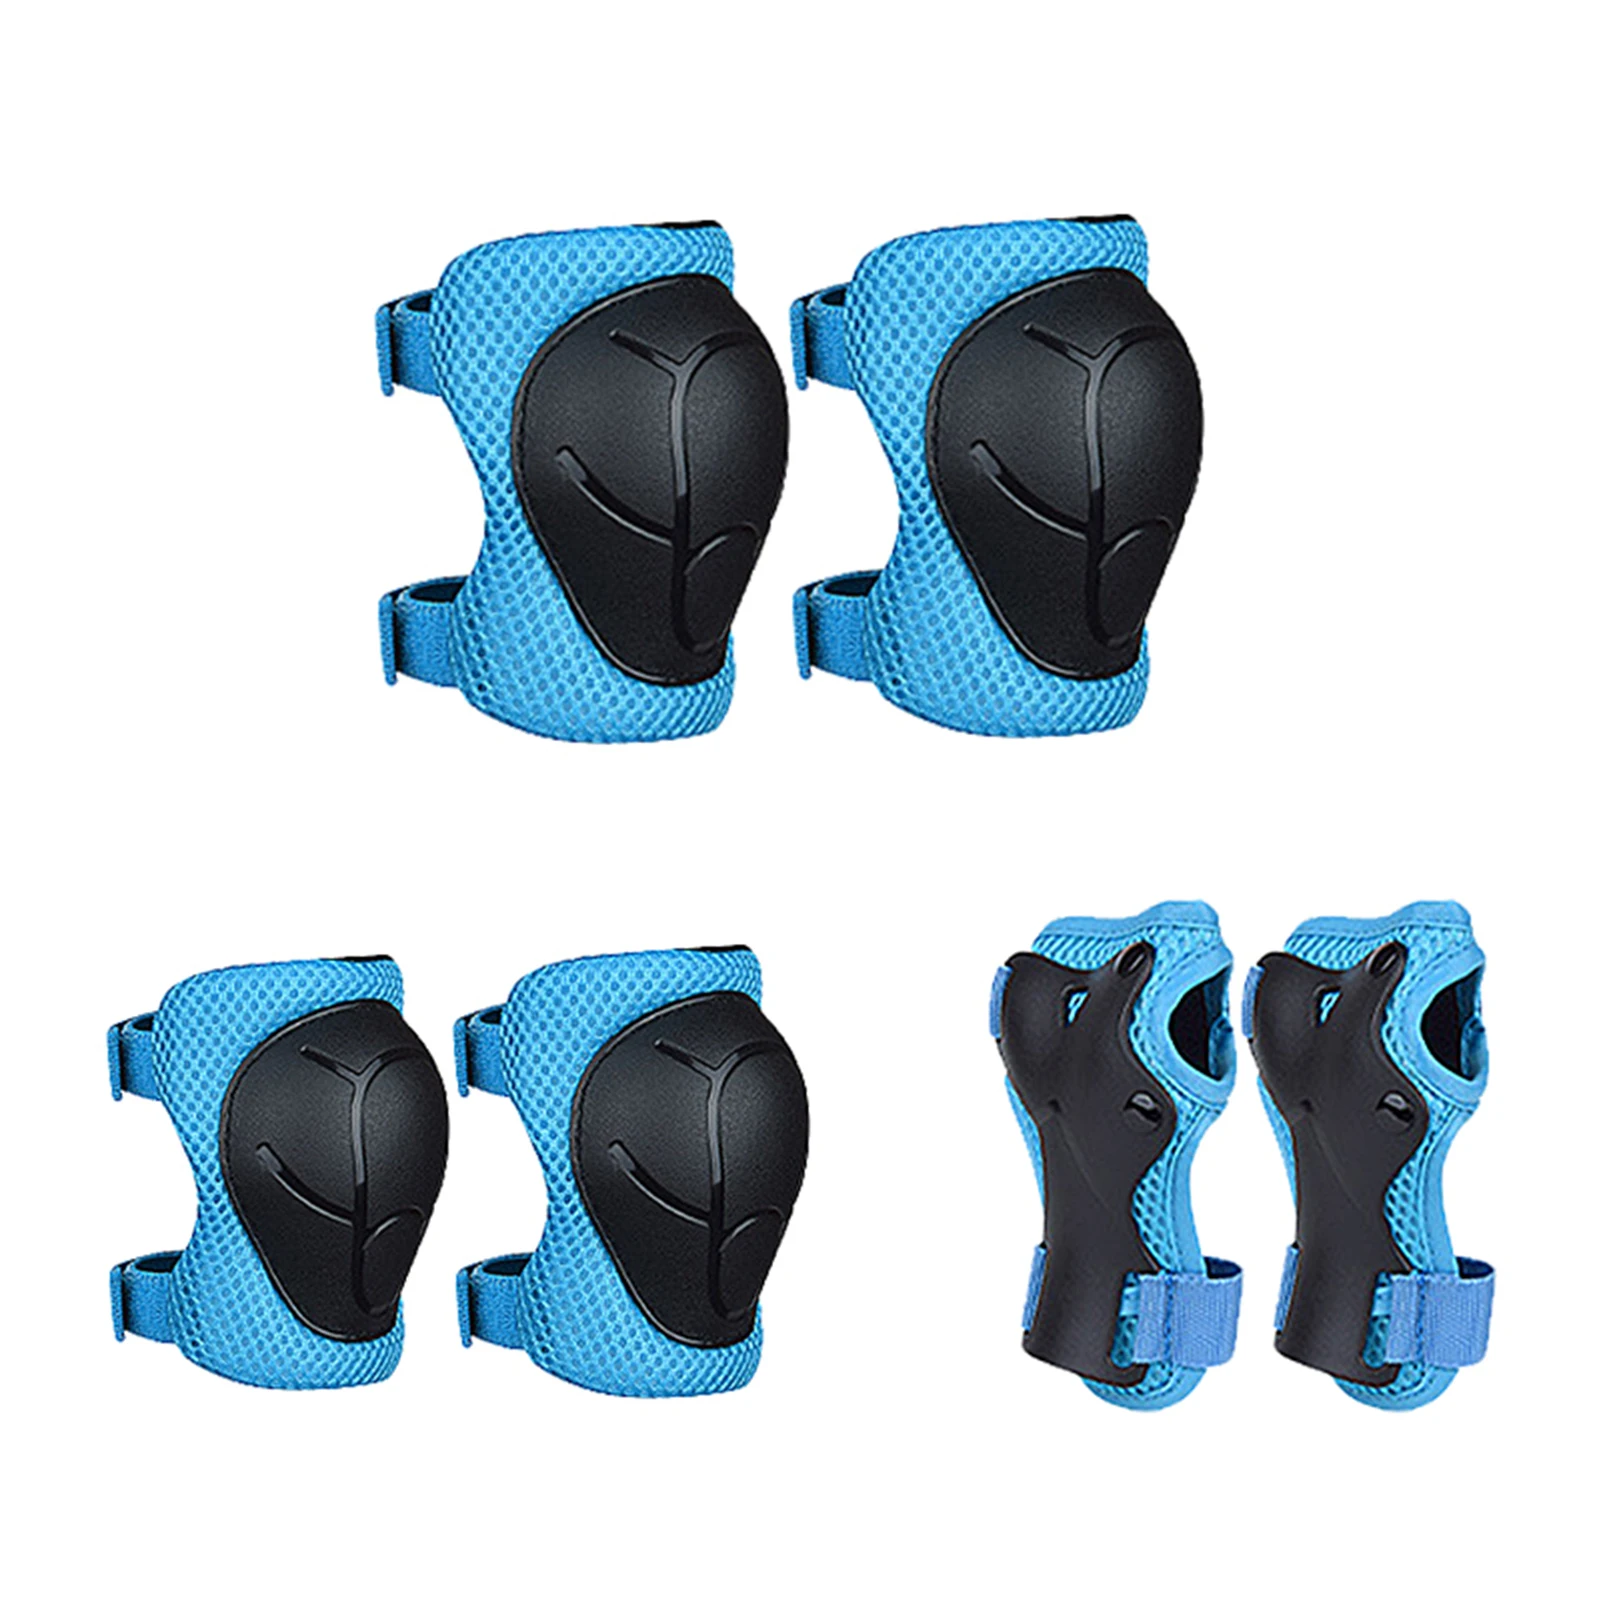 Details about   6pcs Protective Gear Set for Kids Children Knee Pad Elbow Pads Wrist Guards Kit 